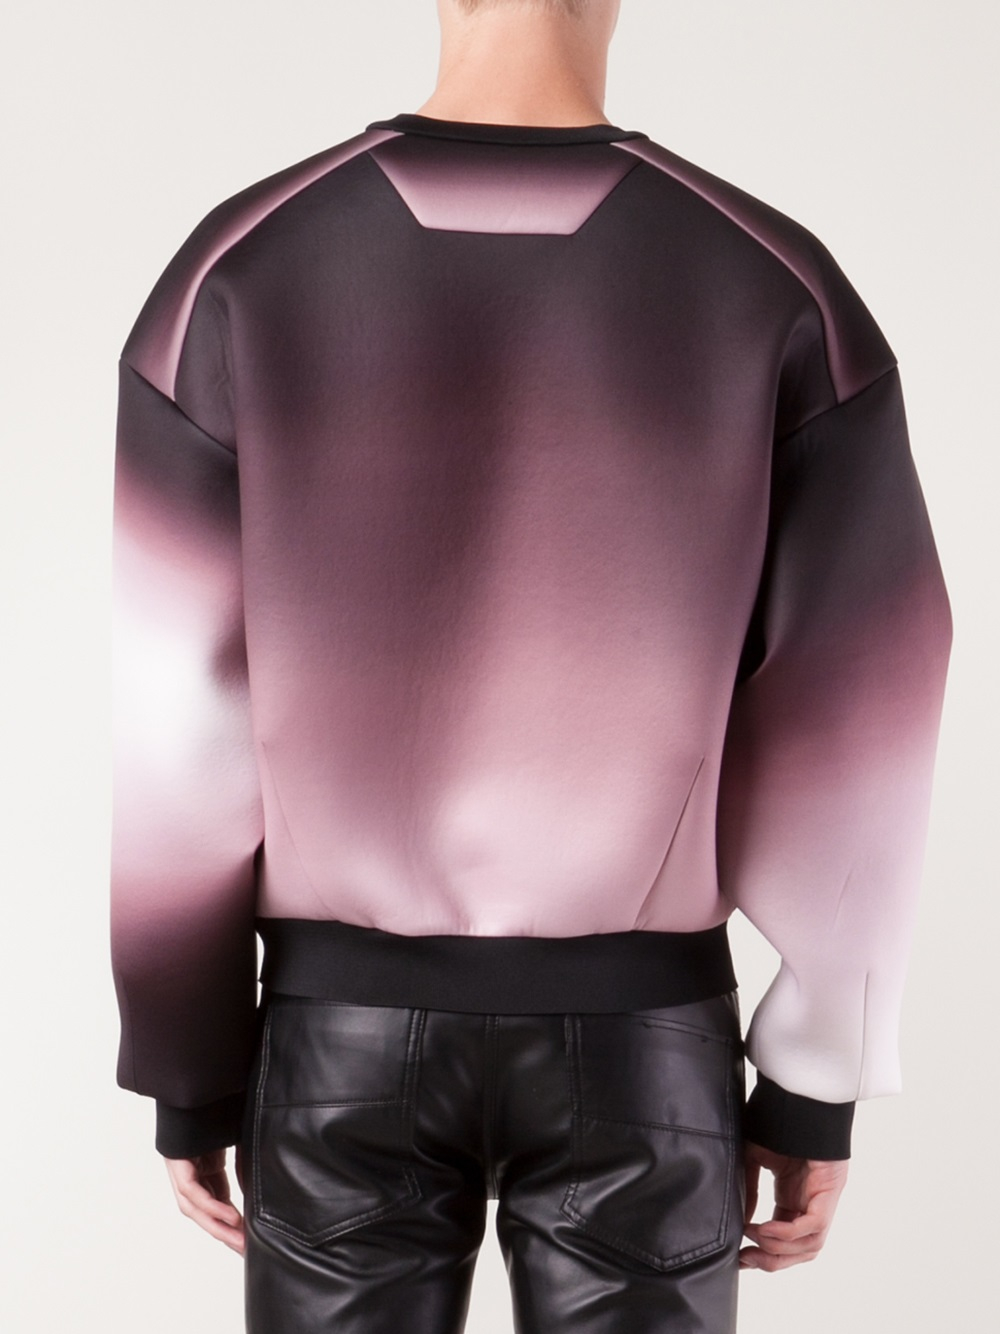 Juun.J Graphic Long Sleeve Sweatshirt in Pink for Men - Lyst